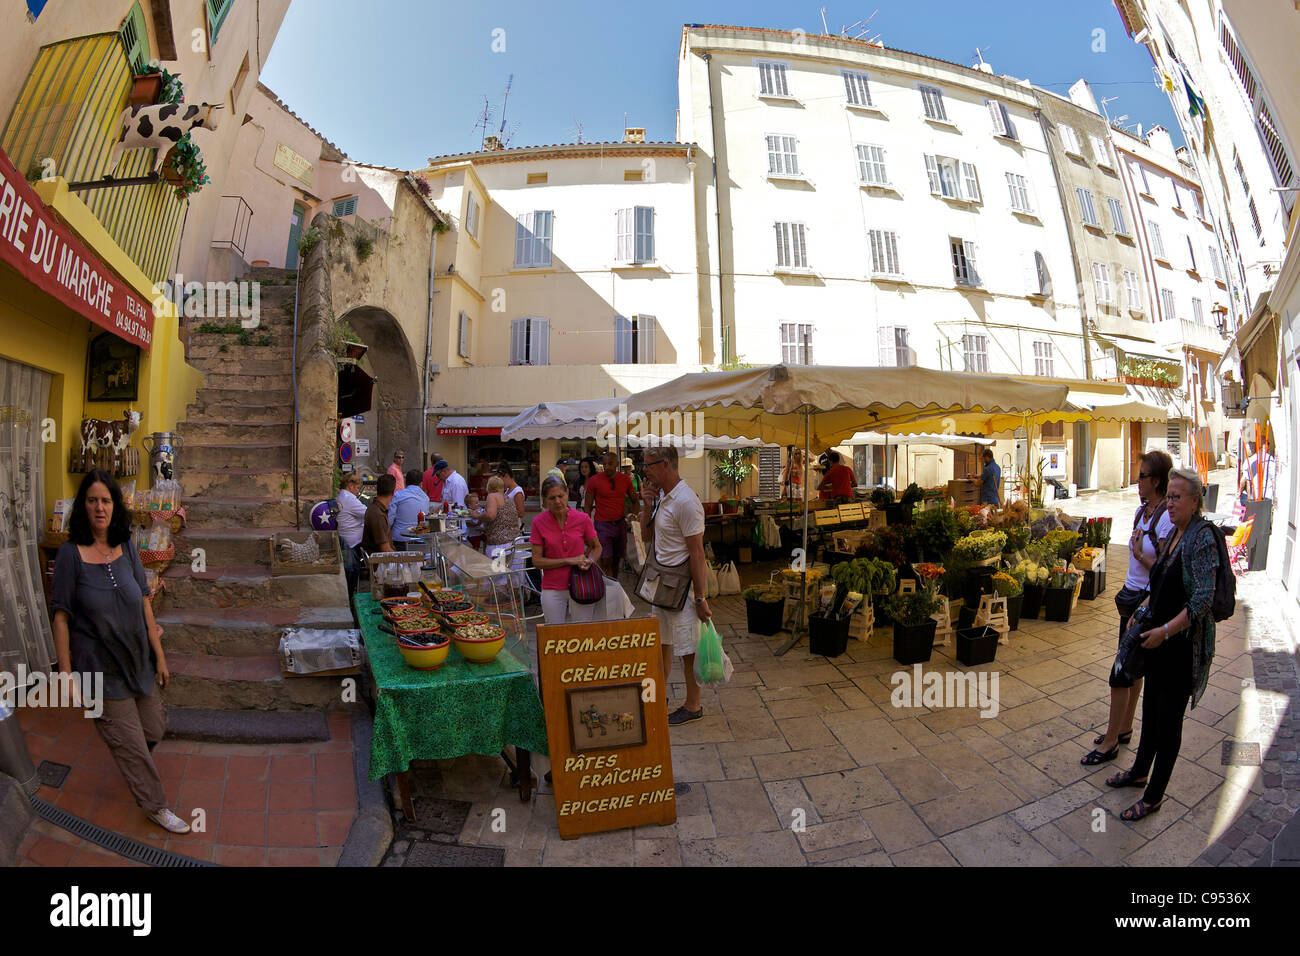 Fruit and vegetable market stall, Saint-Tropez, Var, Provence, Cote d'Azur, France Stock Photo